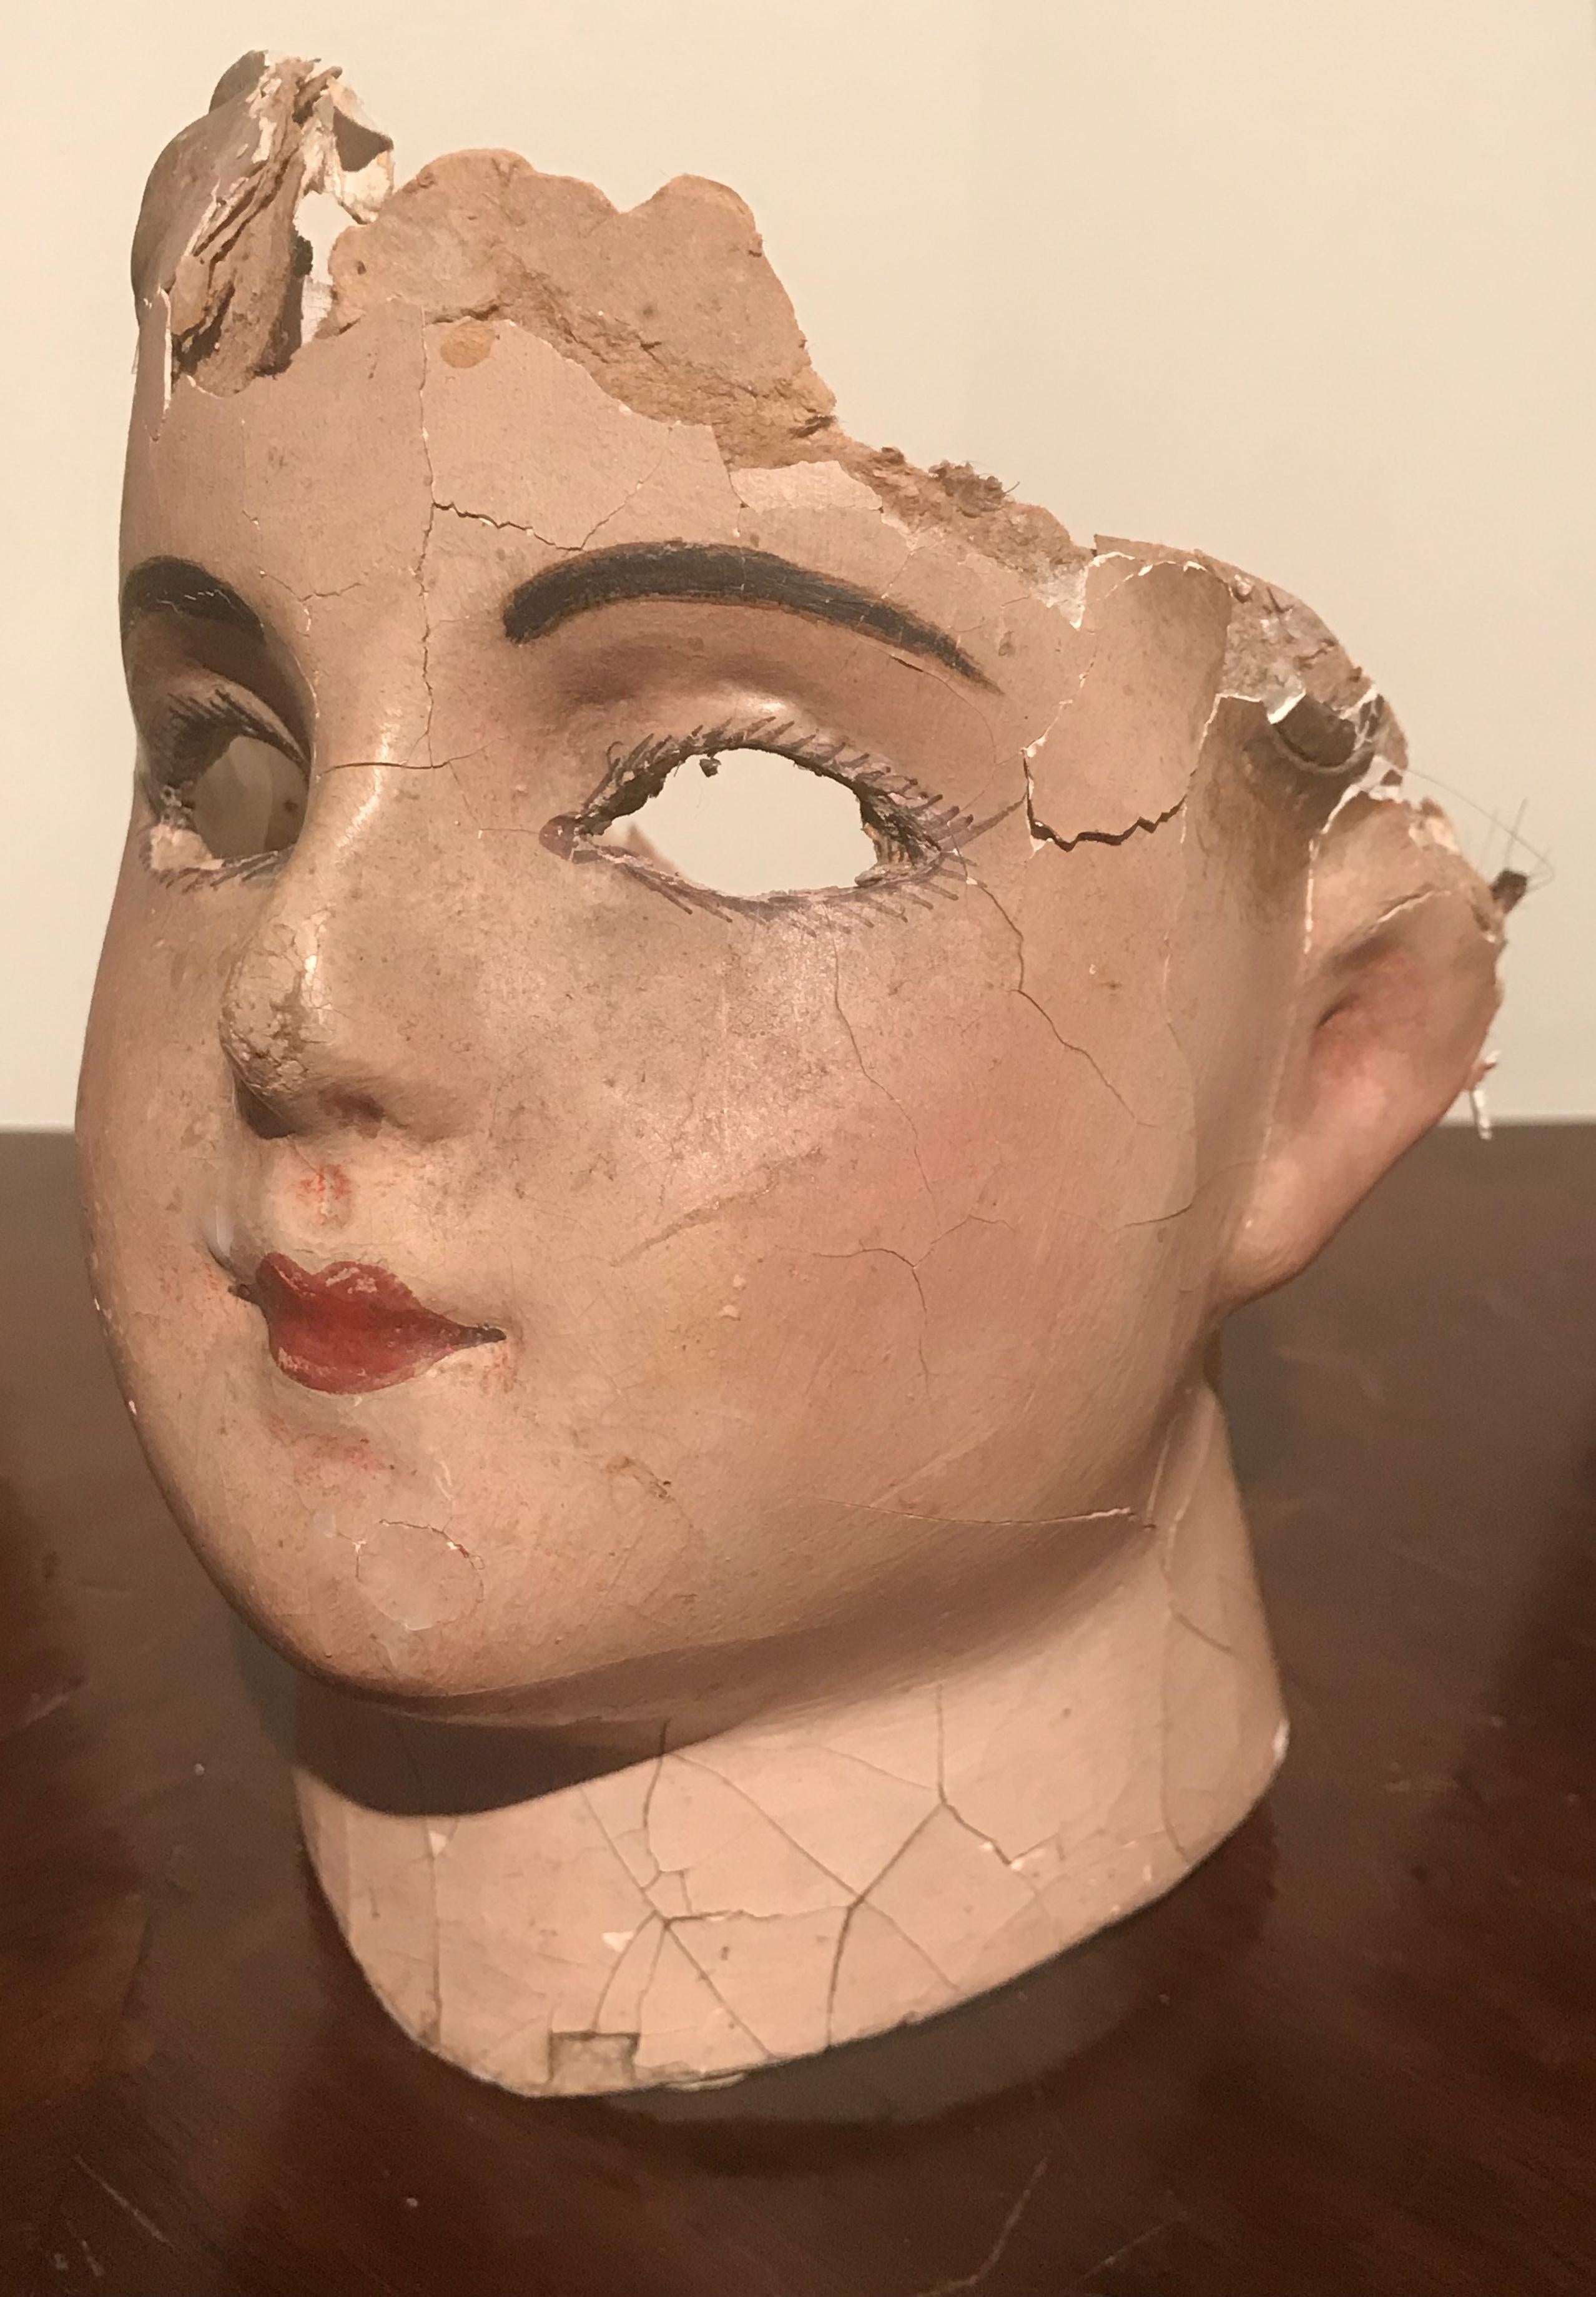 French papier mâché doll head retaining the original paint. A lovely sculpture to create an original vignette.